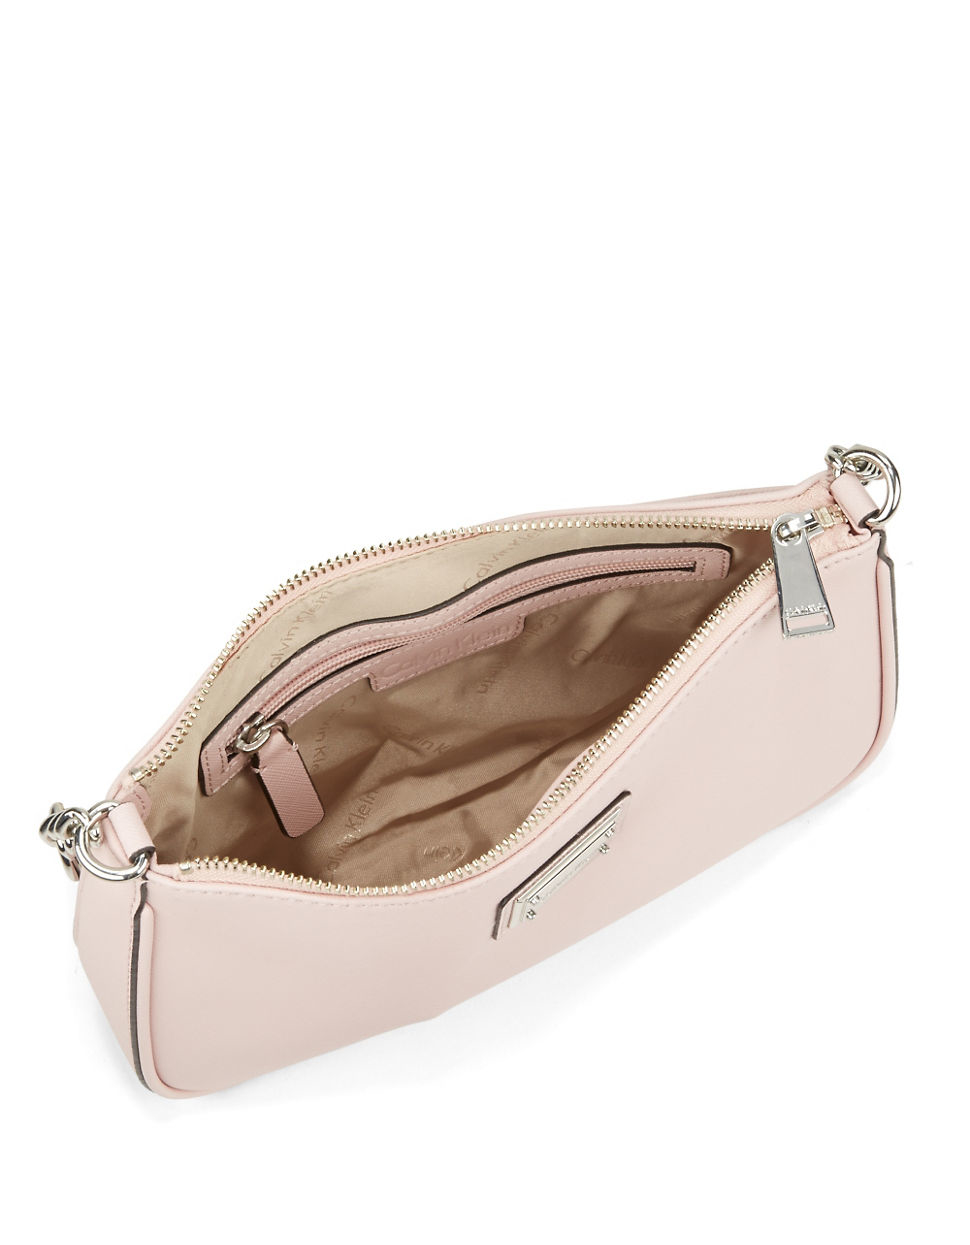 Calvin klein Crosshatched Leather Shoulder Bag in Pink (Dusty Rose) | Lyst